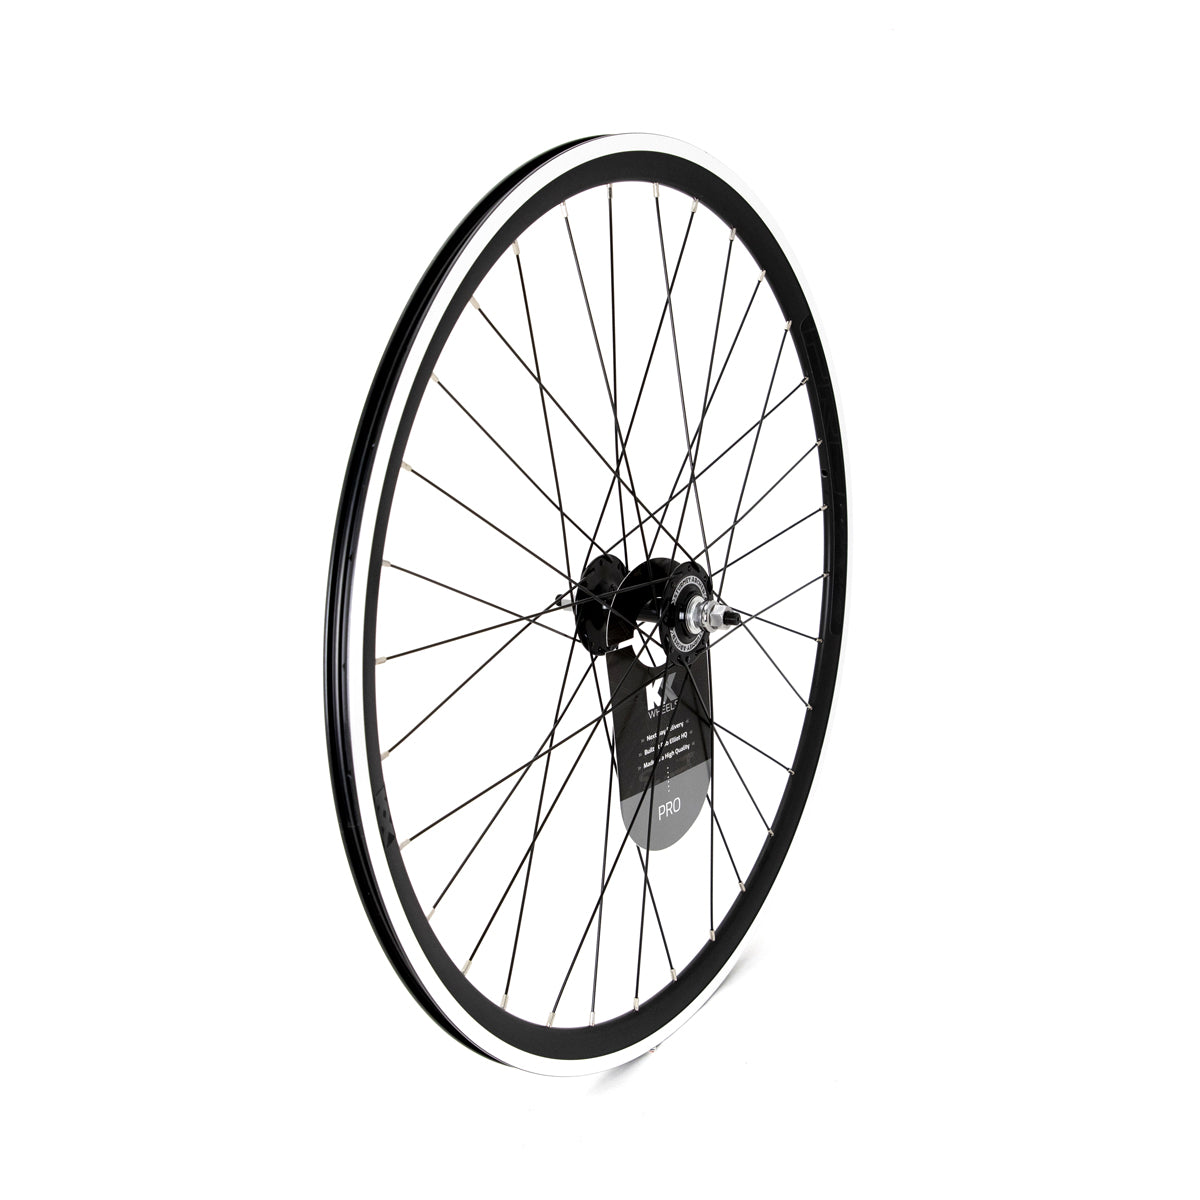 KX Wheels Pro FXD Flip Flop 700c Bike Wheel Set Alternate 2